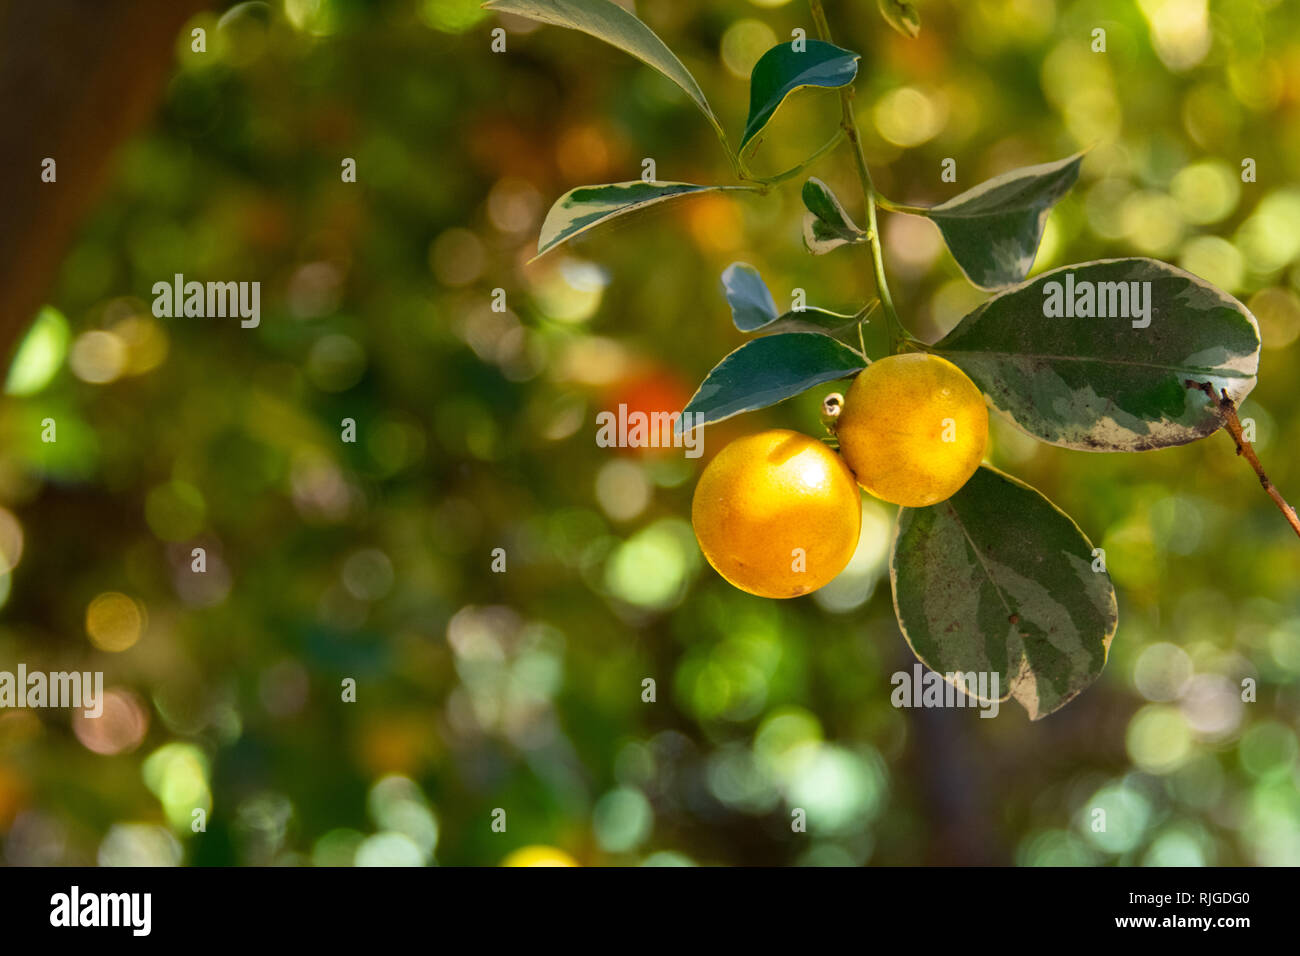 Calamondin orange fruit growing on a tree on a sunny day - closeup image Stock Photo